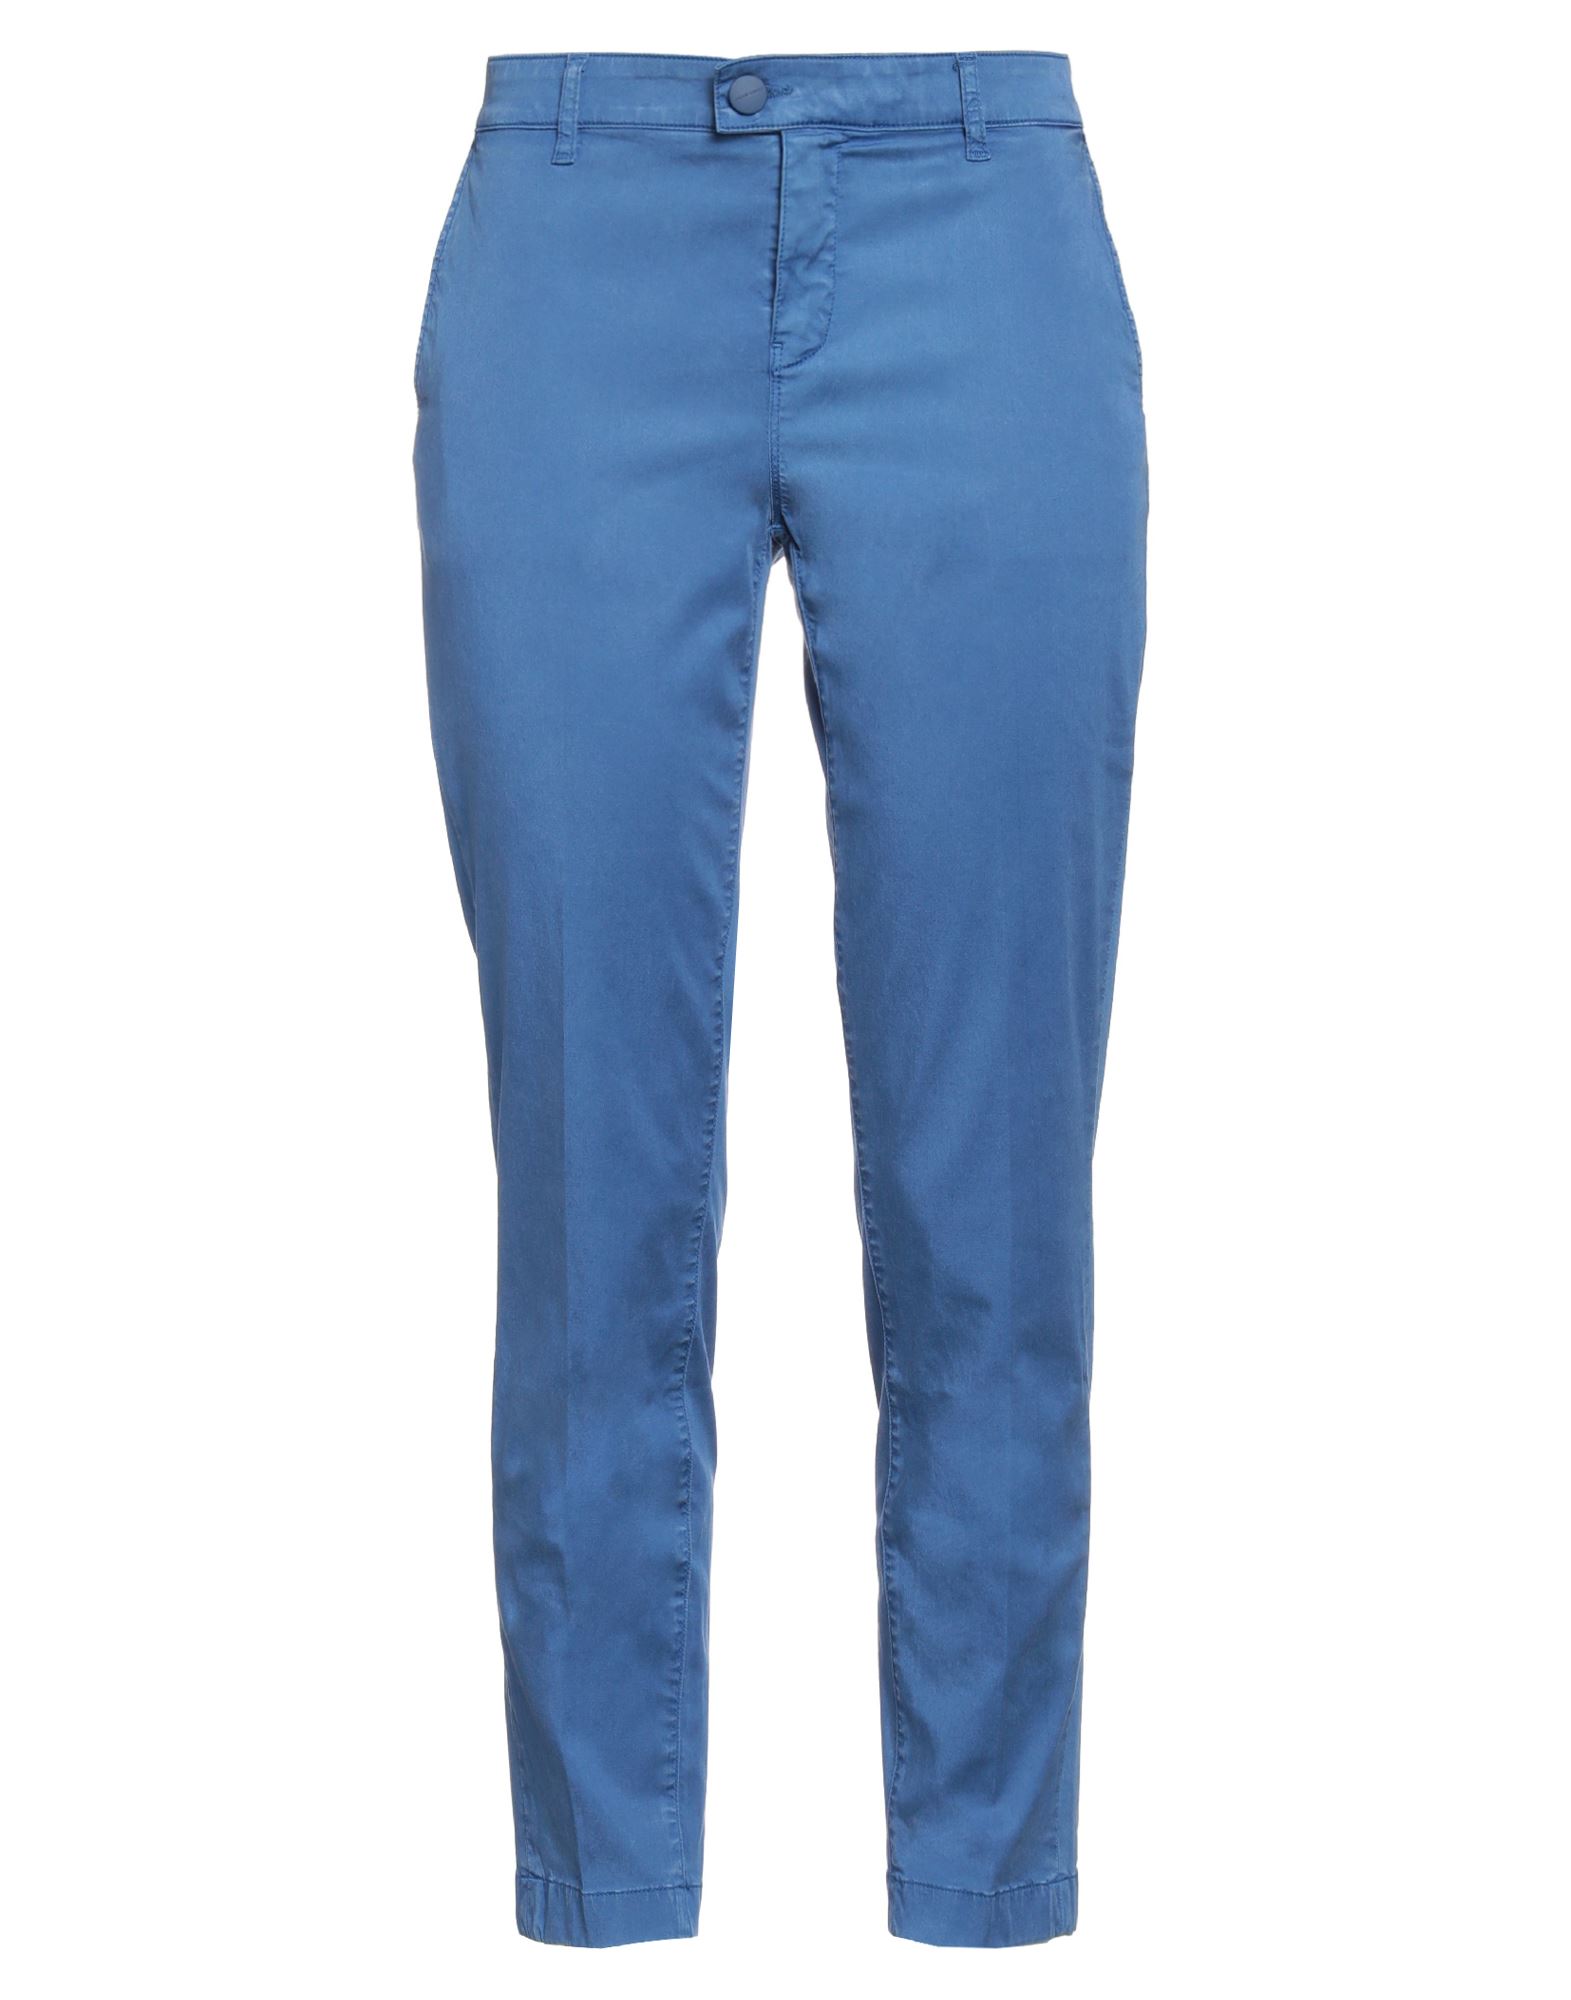 Jacob Cohёn Woman Pants Light Blue Size 28 Lyocell, Cotton, Elastane